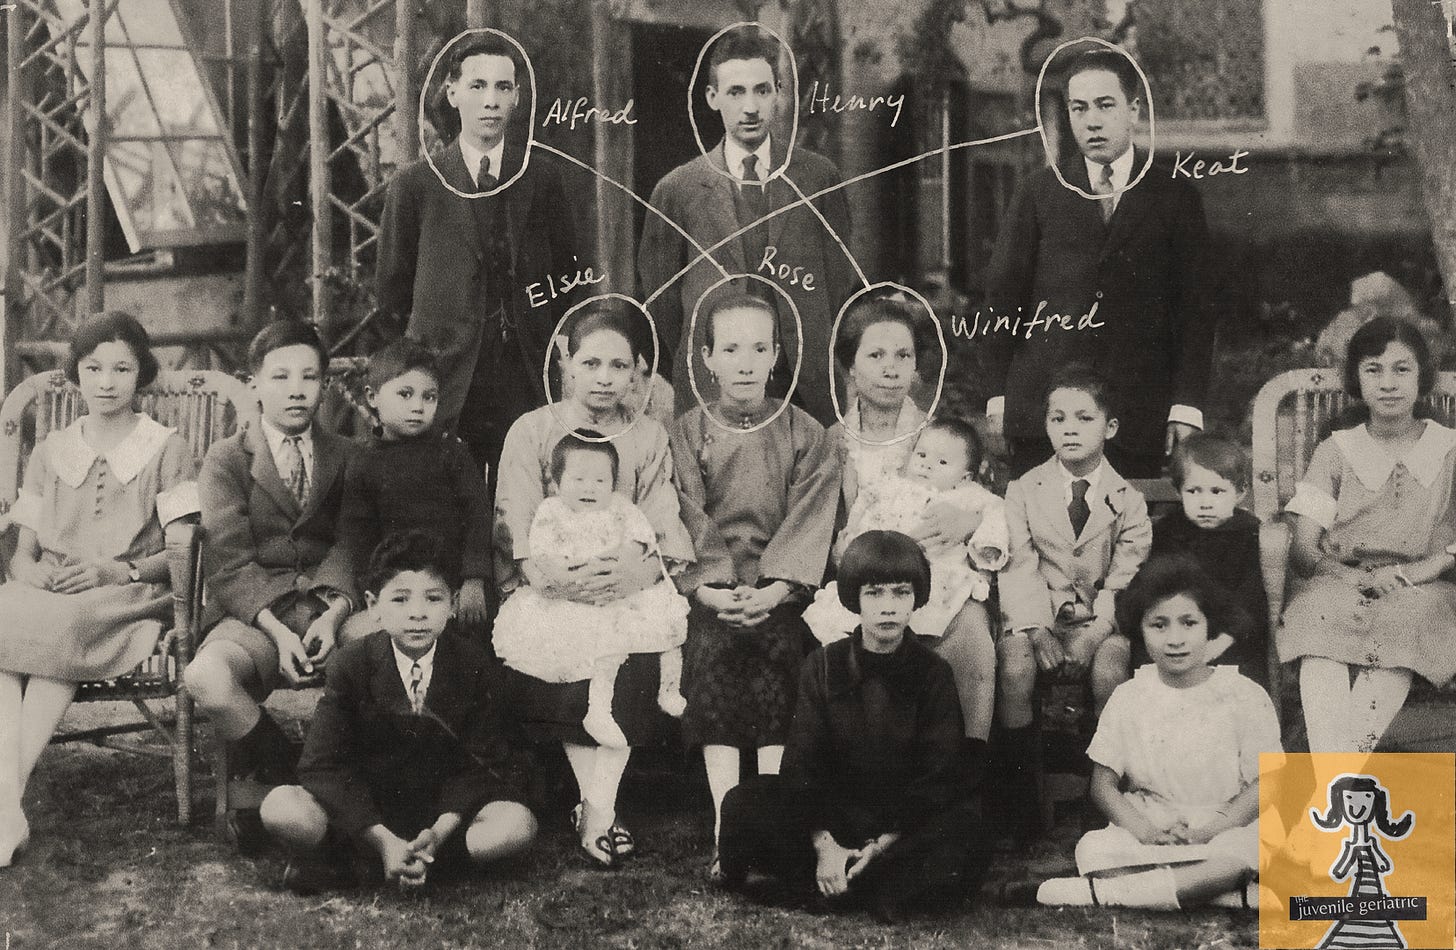 A family portrait in 1923 Shanghai